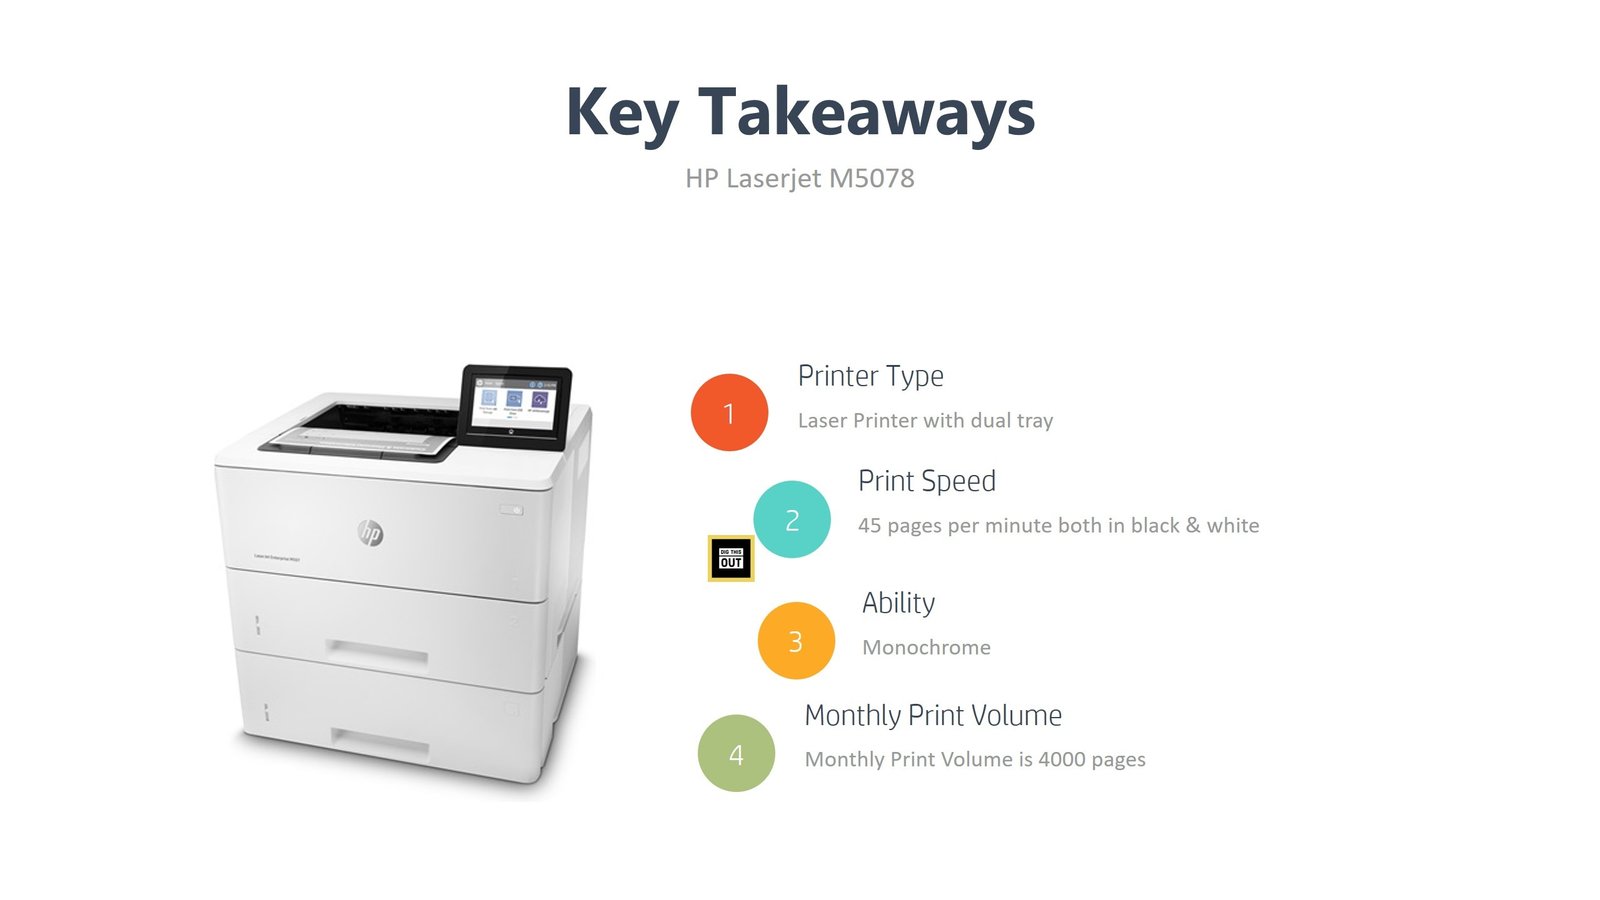 Key Takeaway of HP Laserjet Laser printer with doual-tray